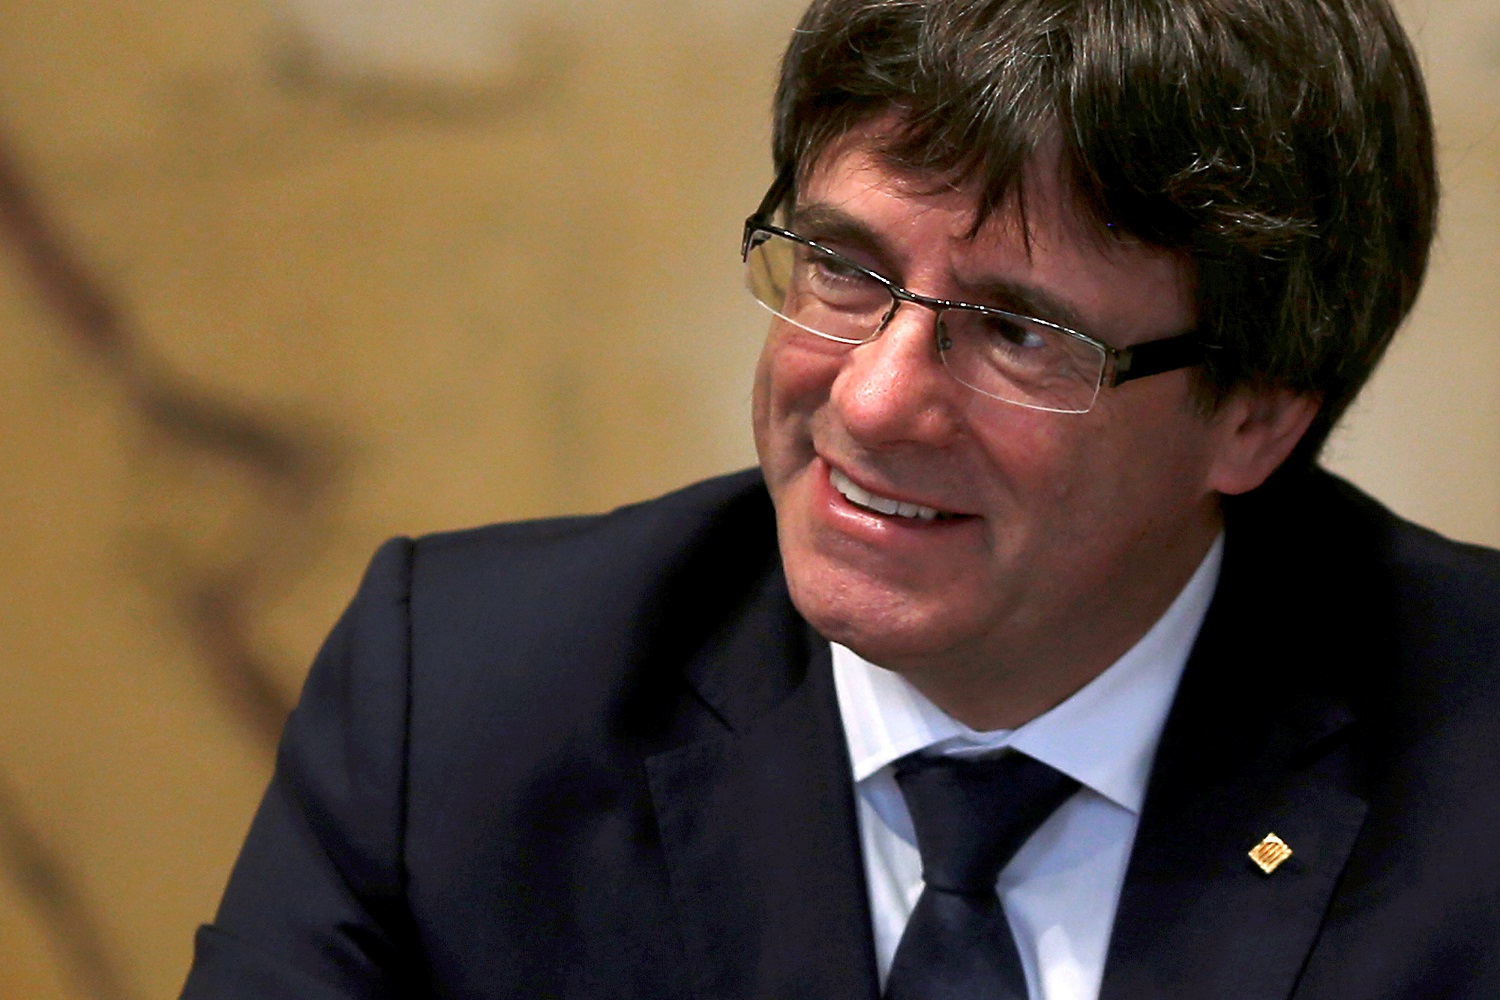 Puigdemont ya está acreditado como diputado en Parlamento catalán